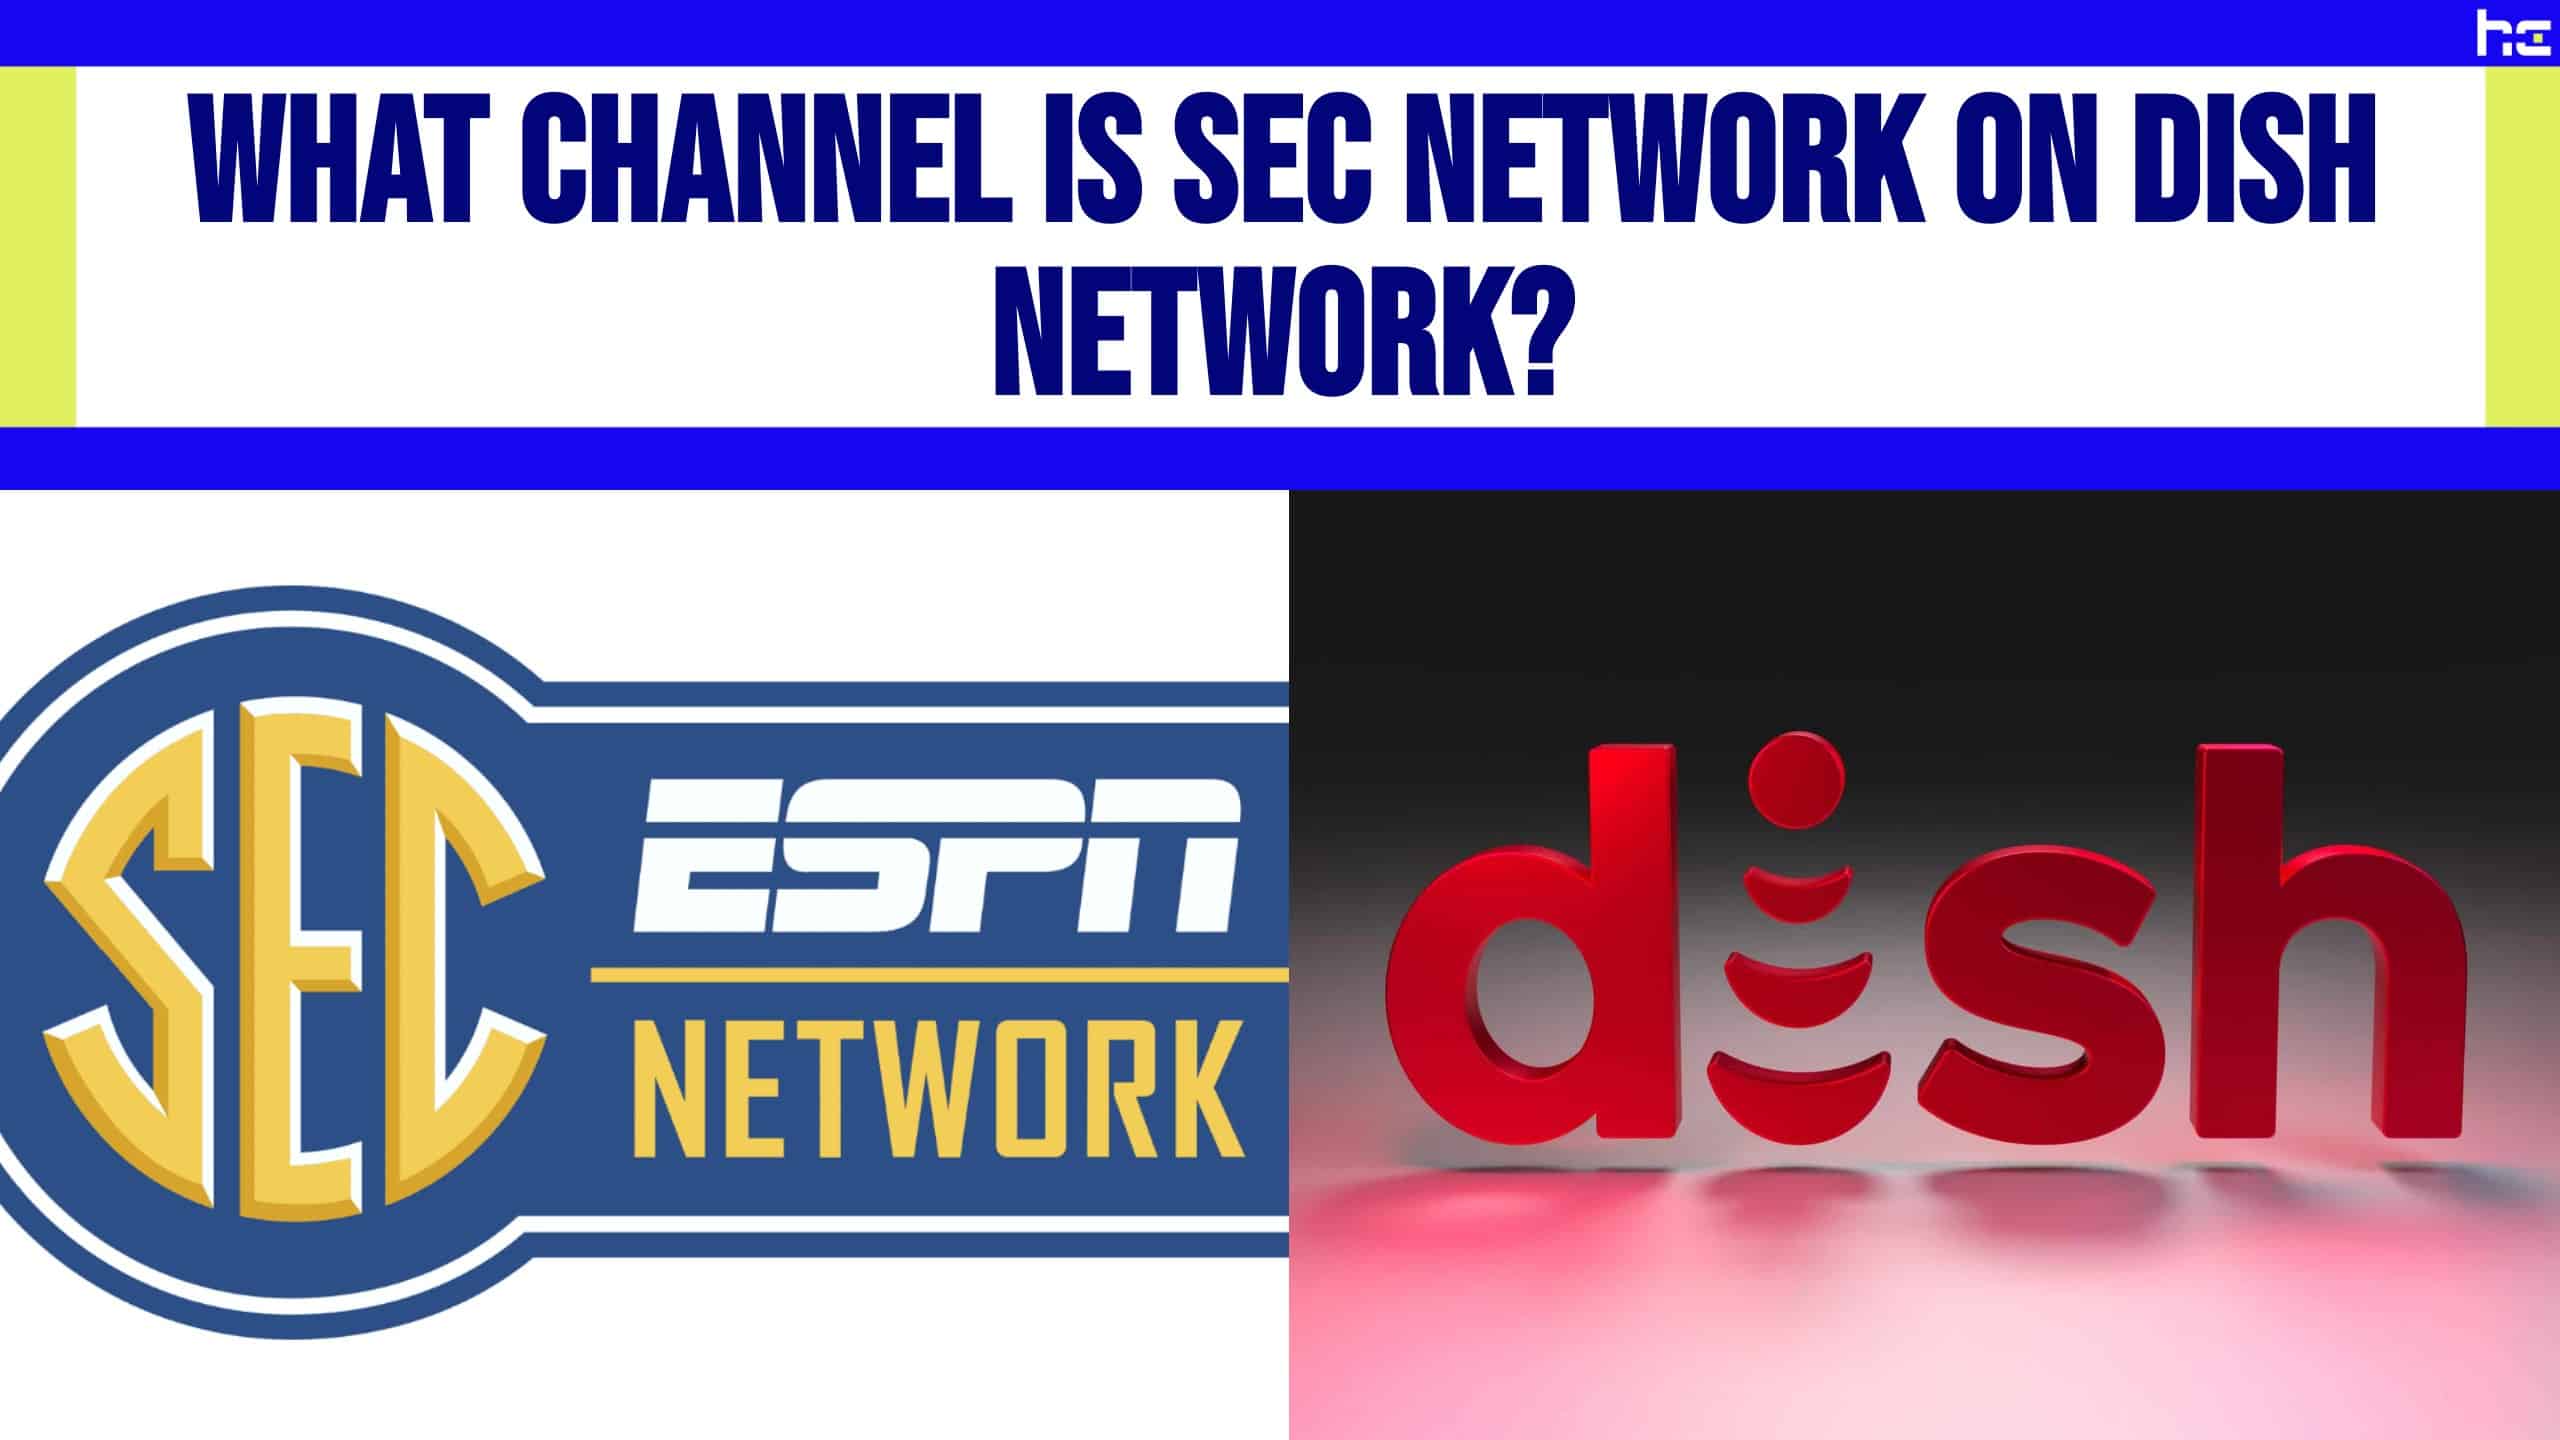 SEC Network and DISH Network logos.